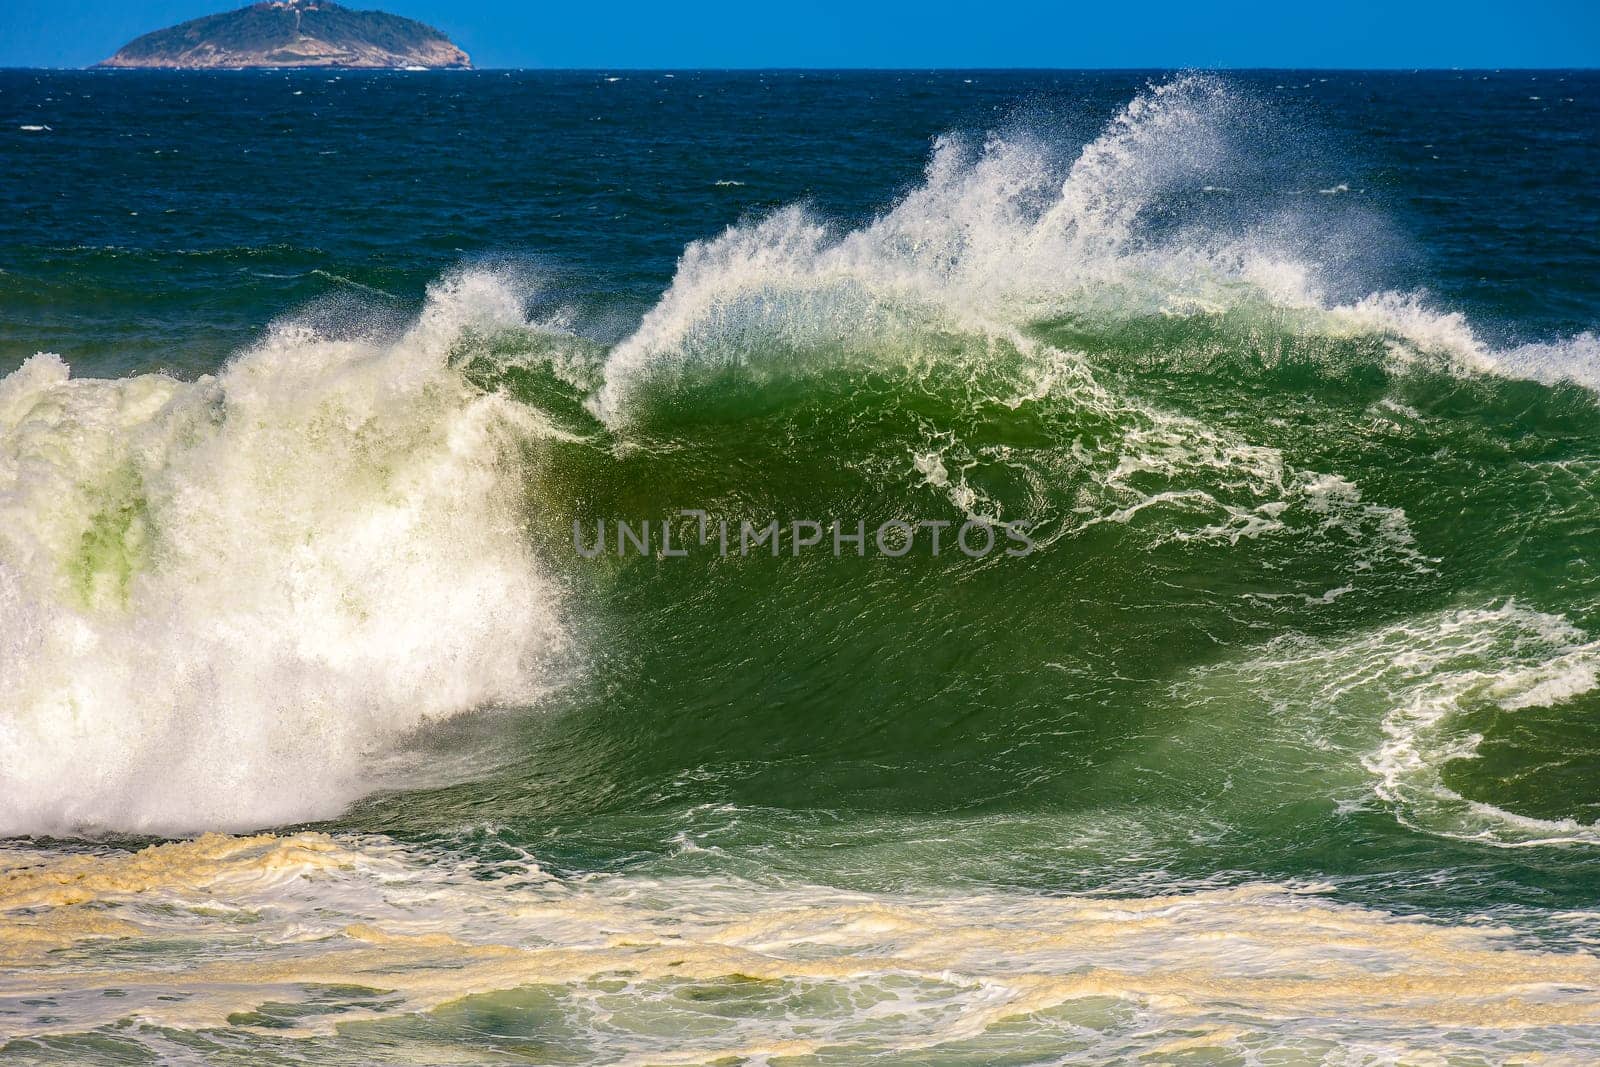 Big wave breaking at Ipanema beach by Fred_Pinheiro